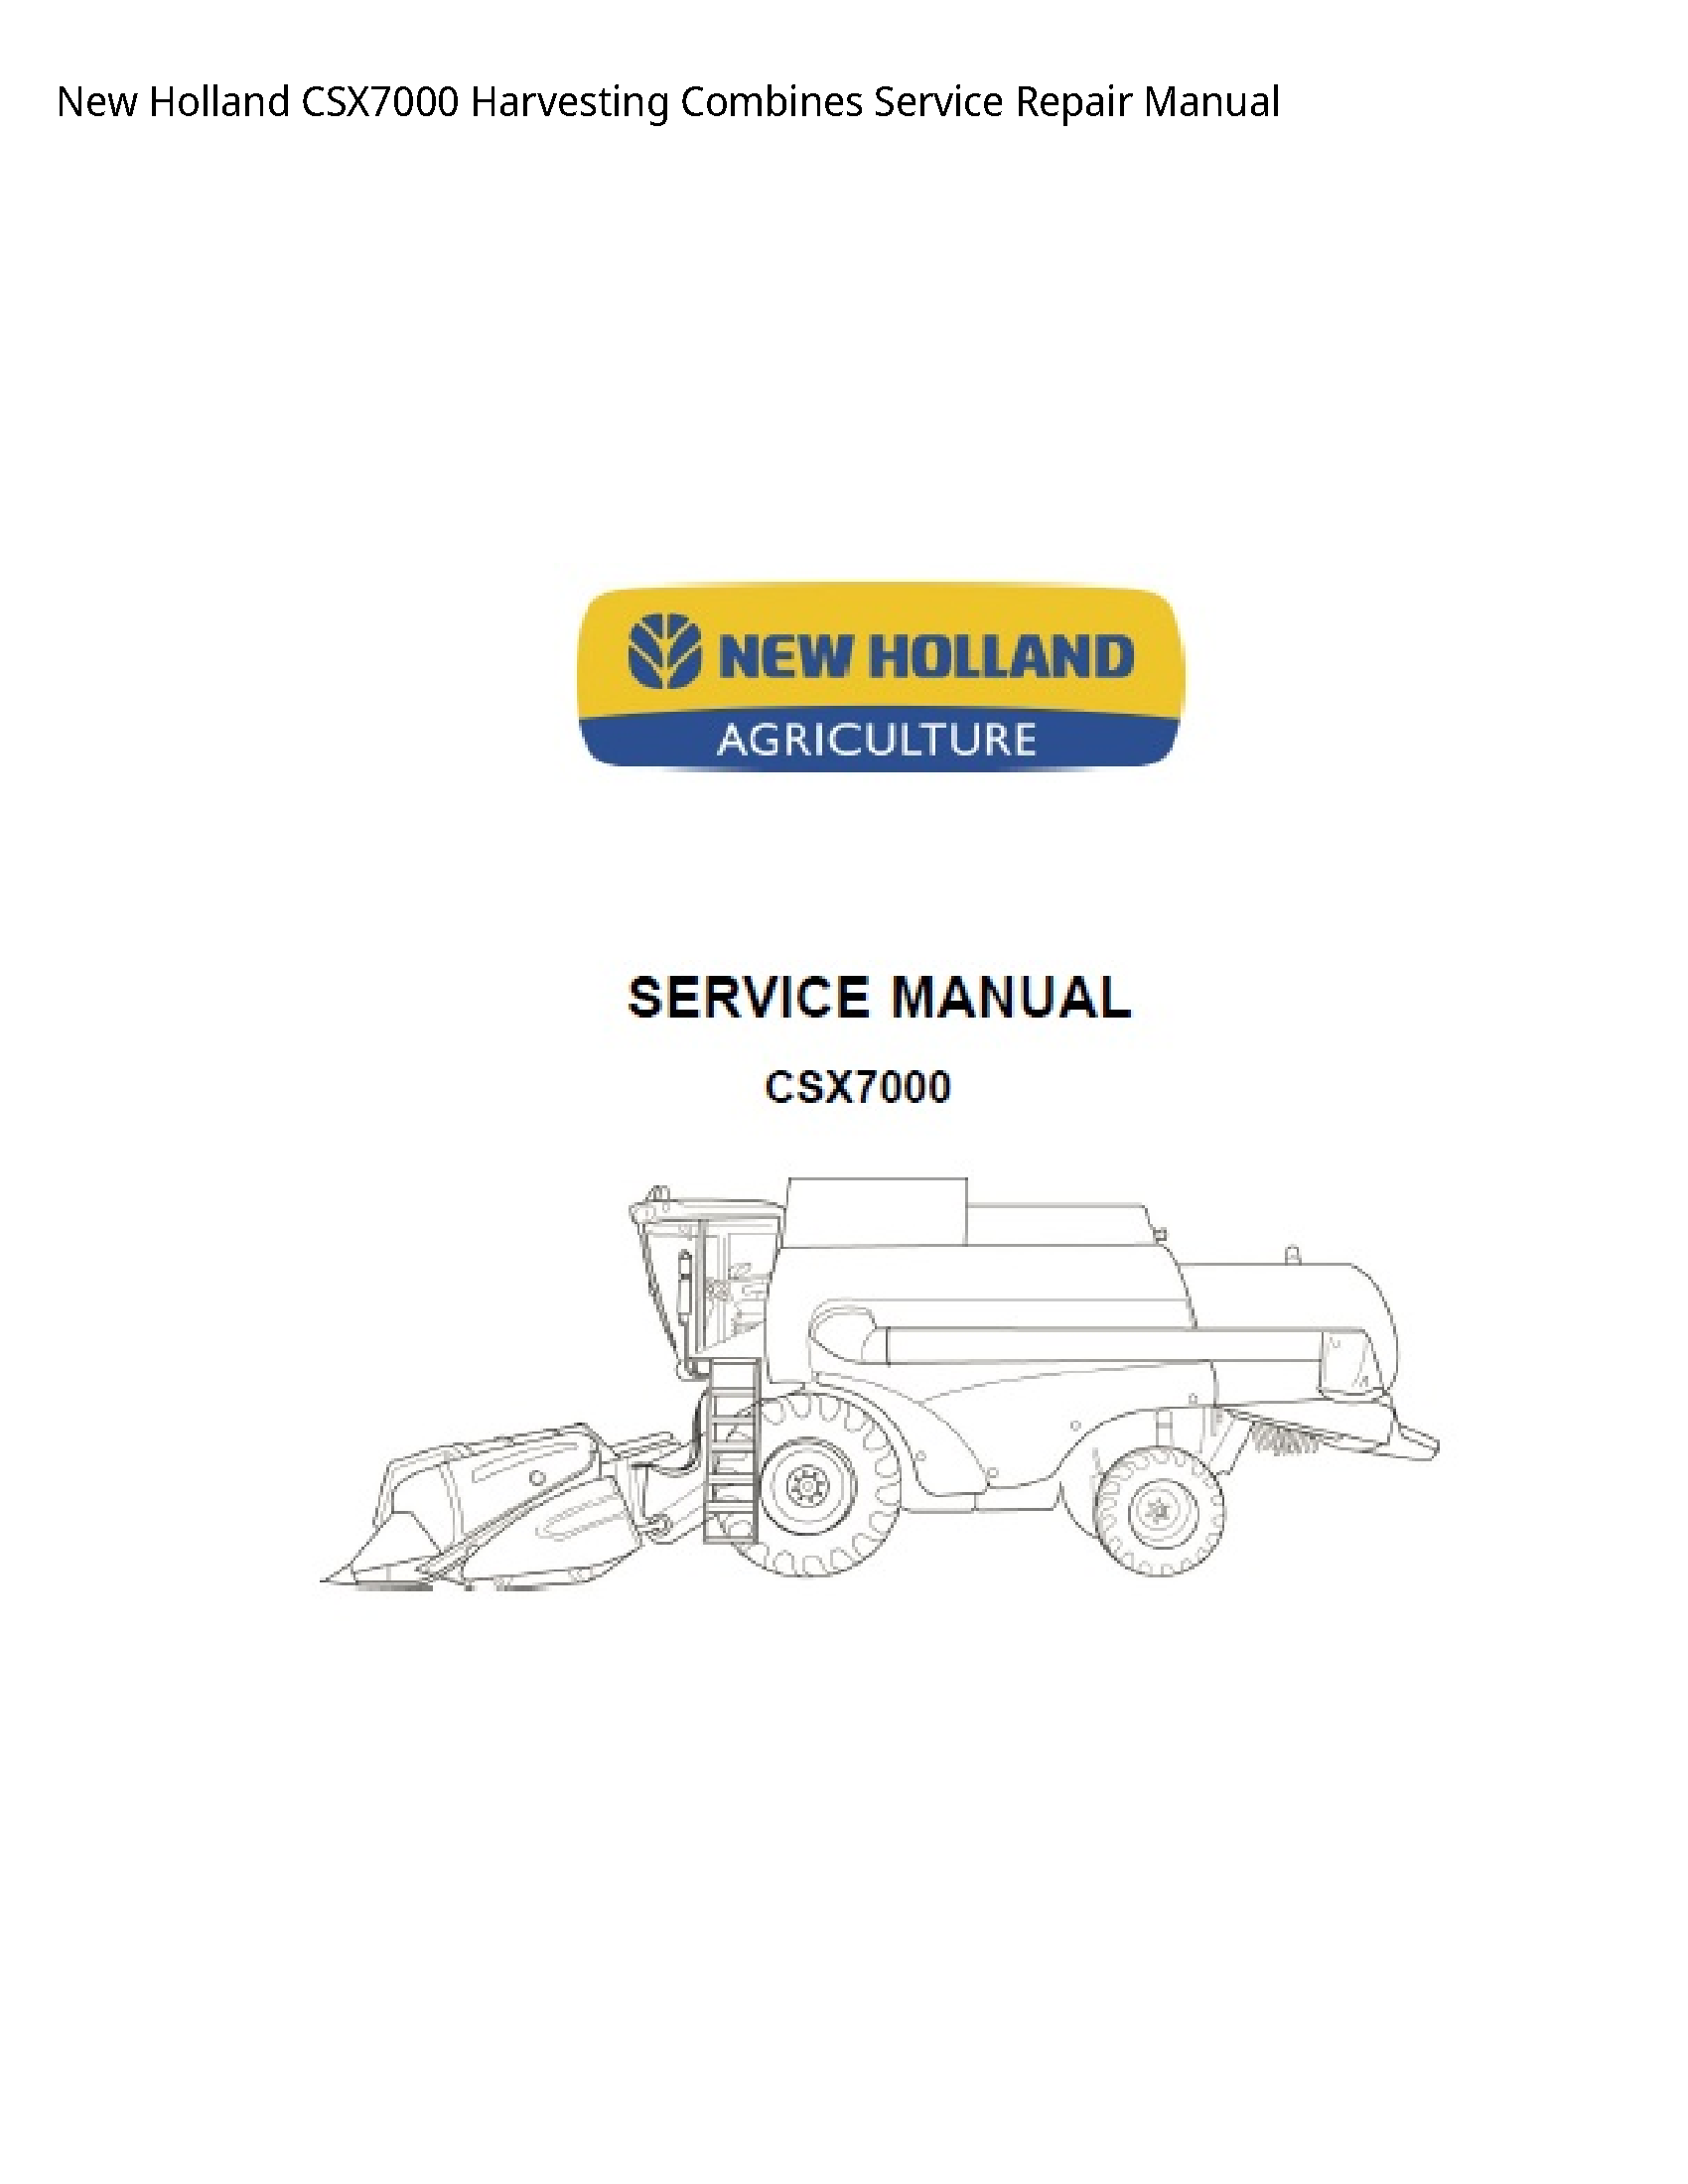 New Holland CSX7000 Harvesting Combines manual